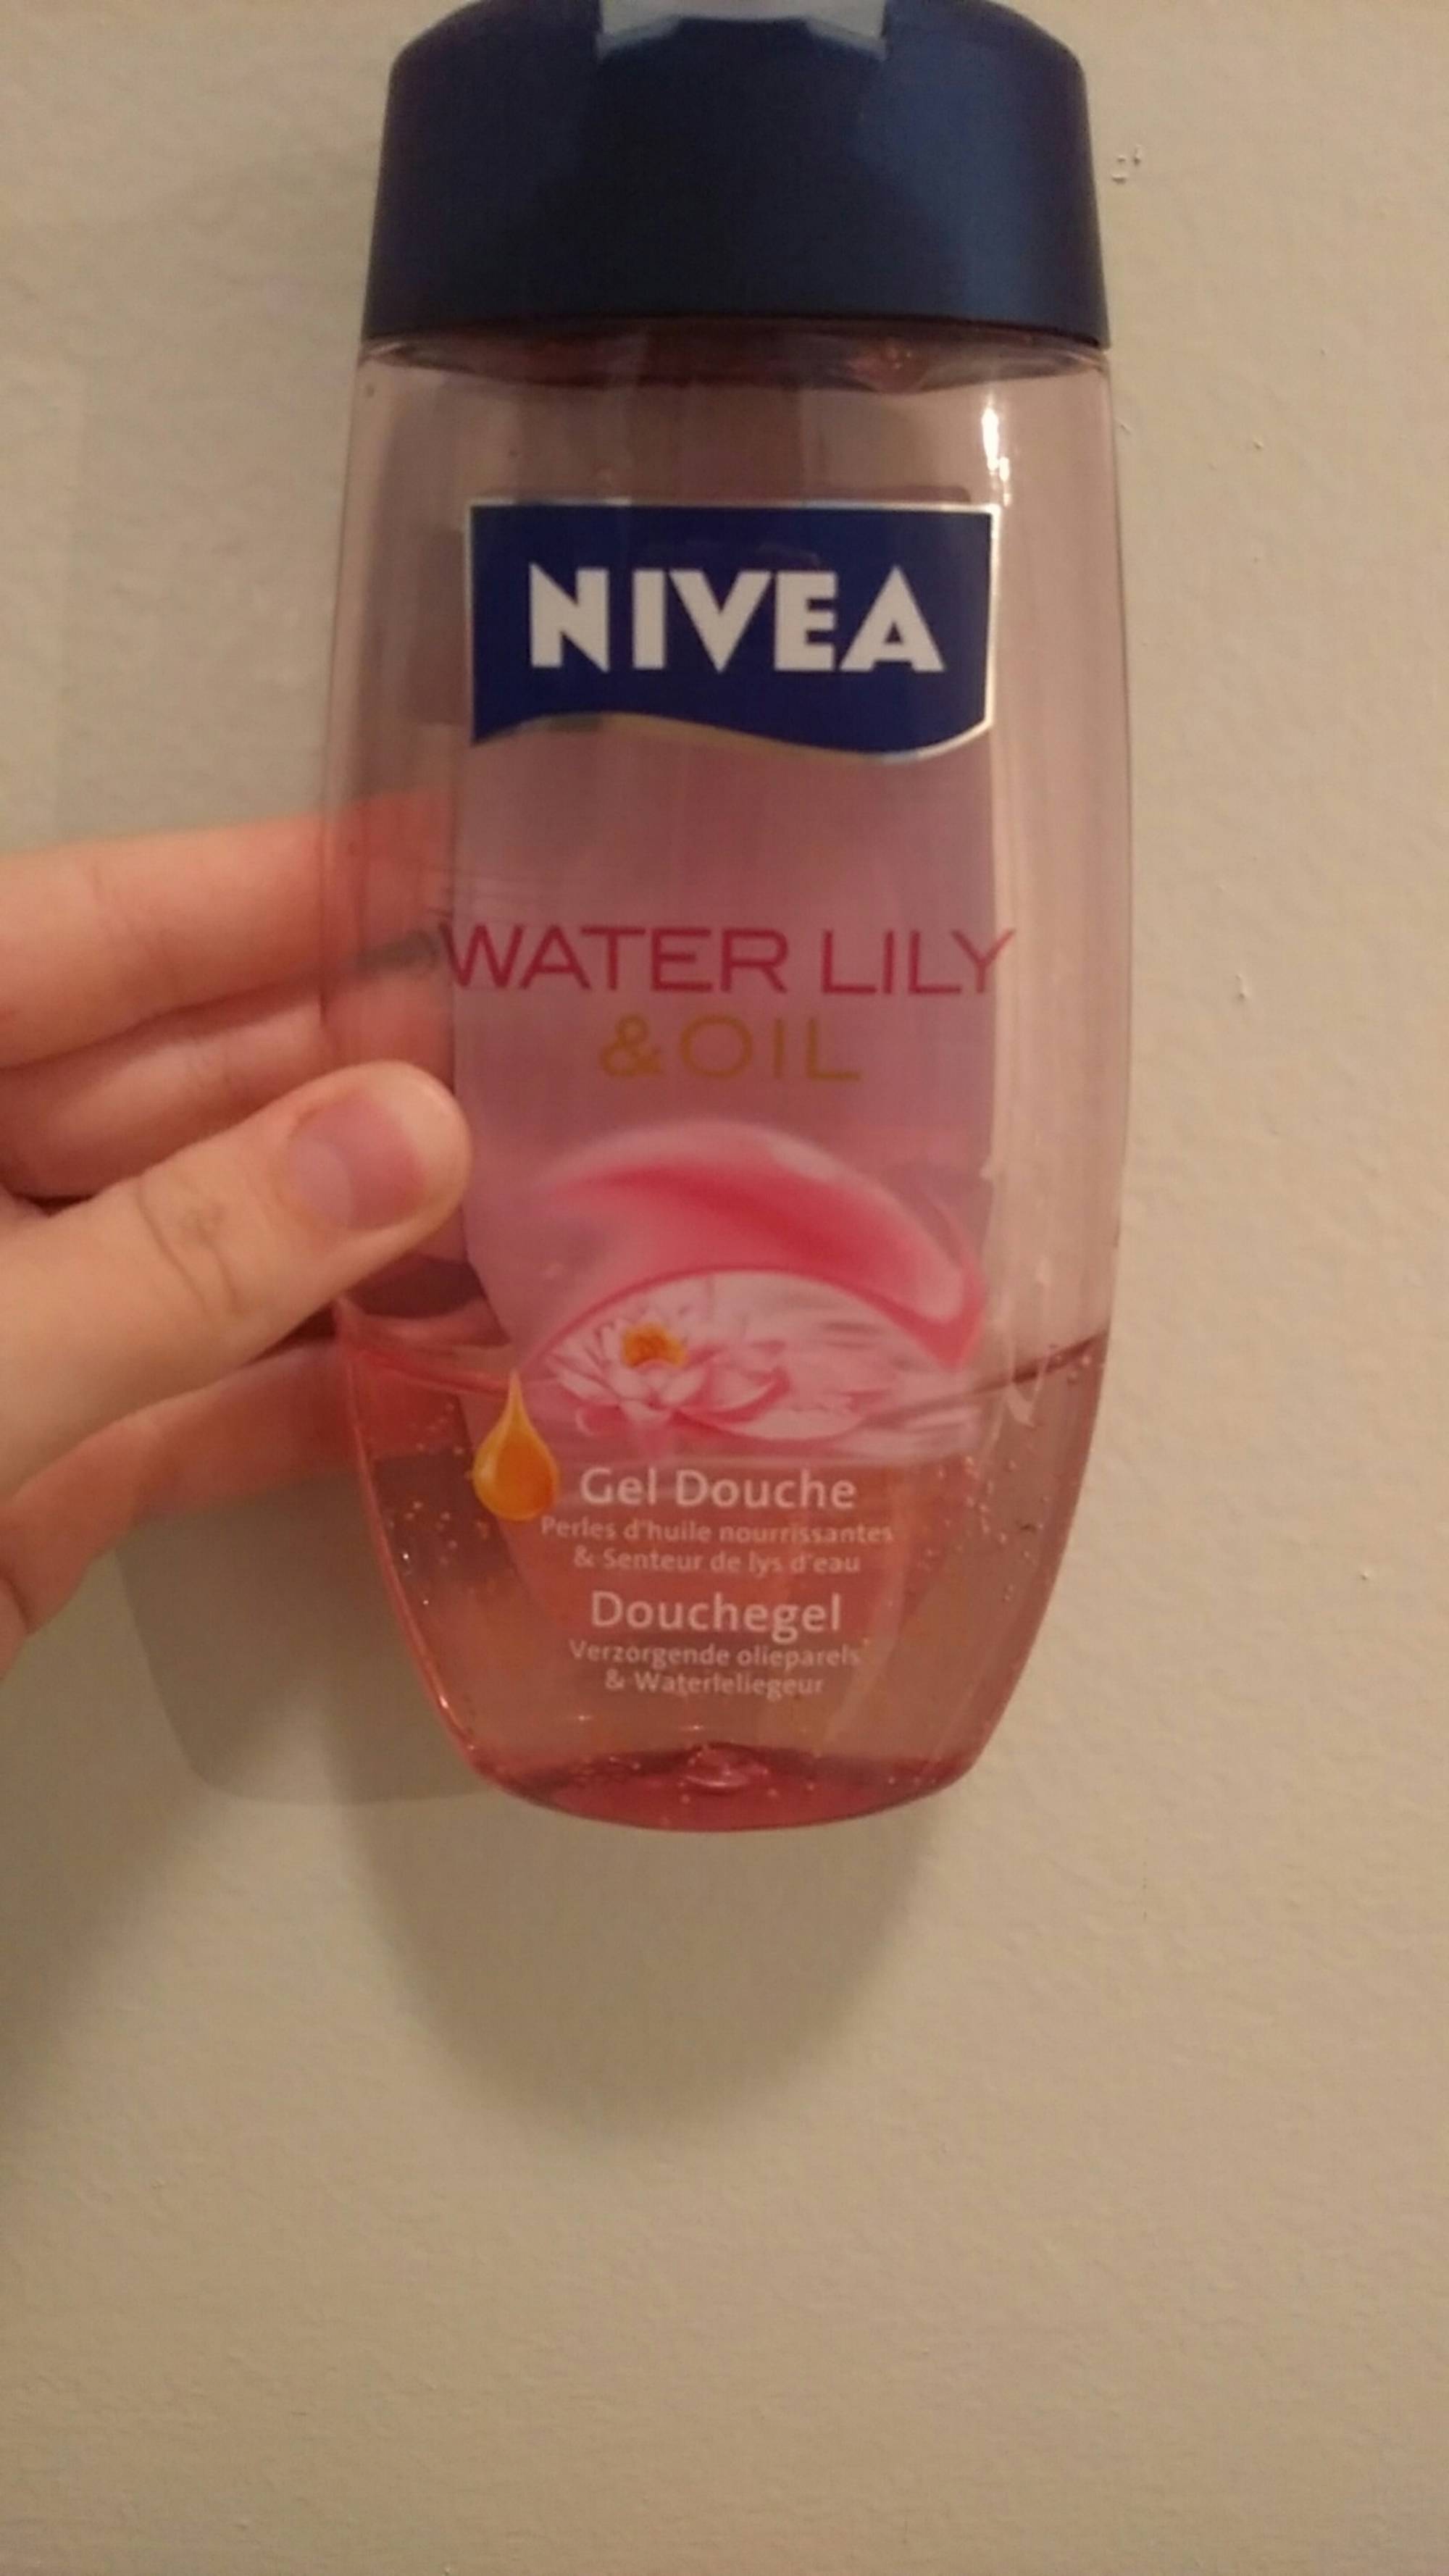 NIVEA - Water lily & oil - Gel douche